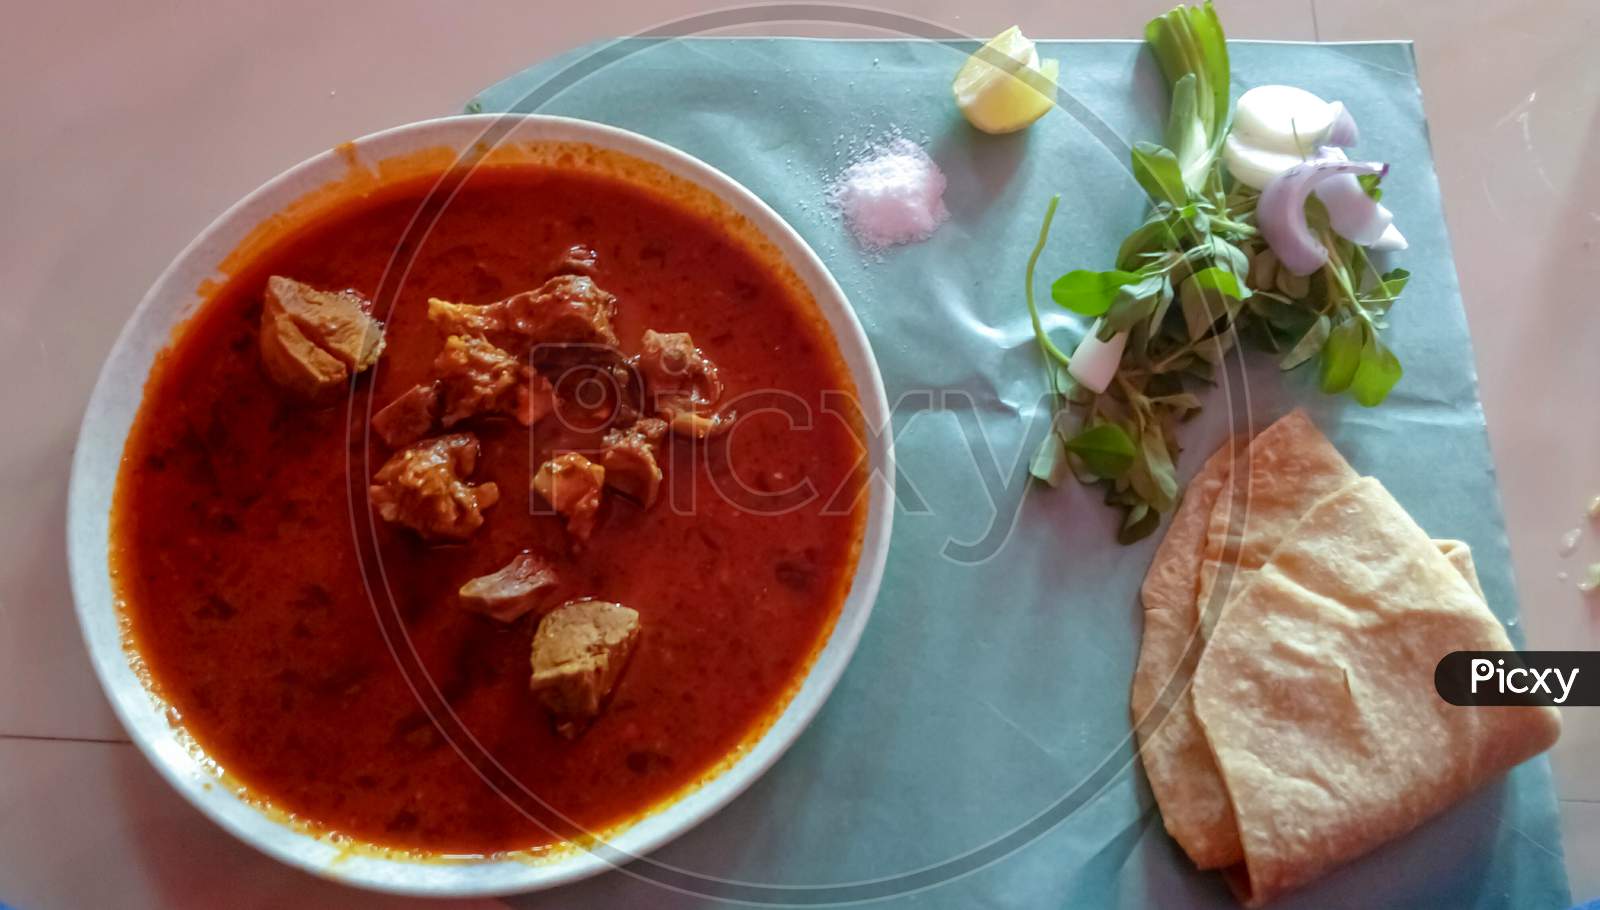 Mutton & roti Maharashtrian thali with salads